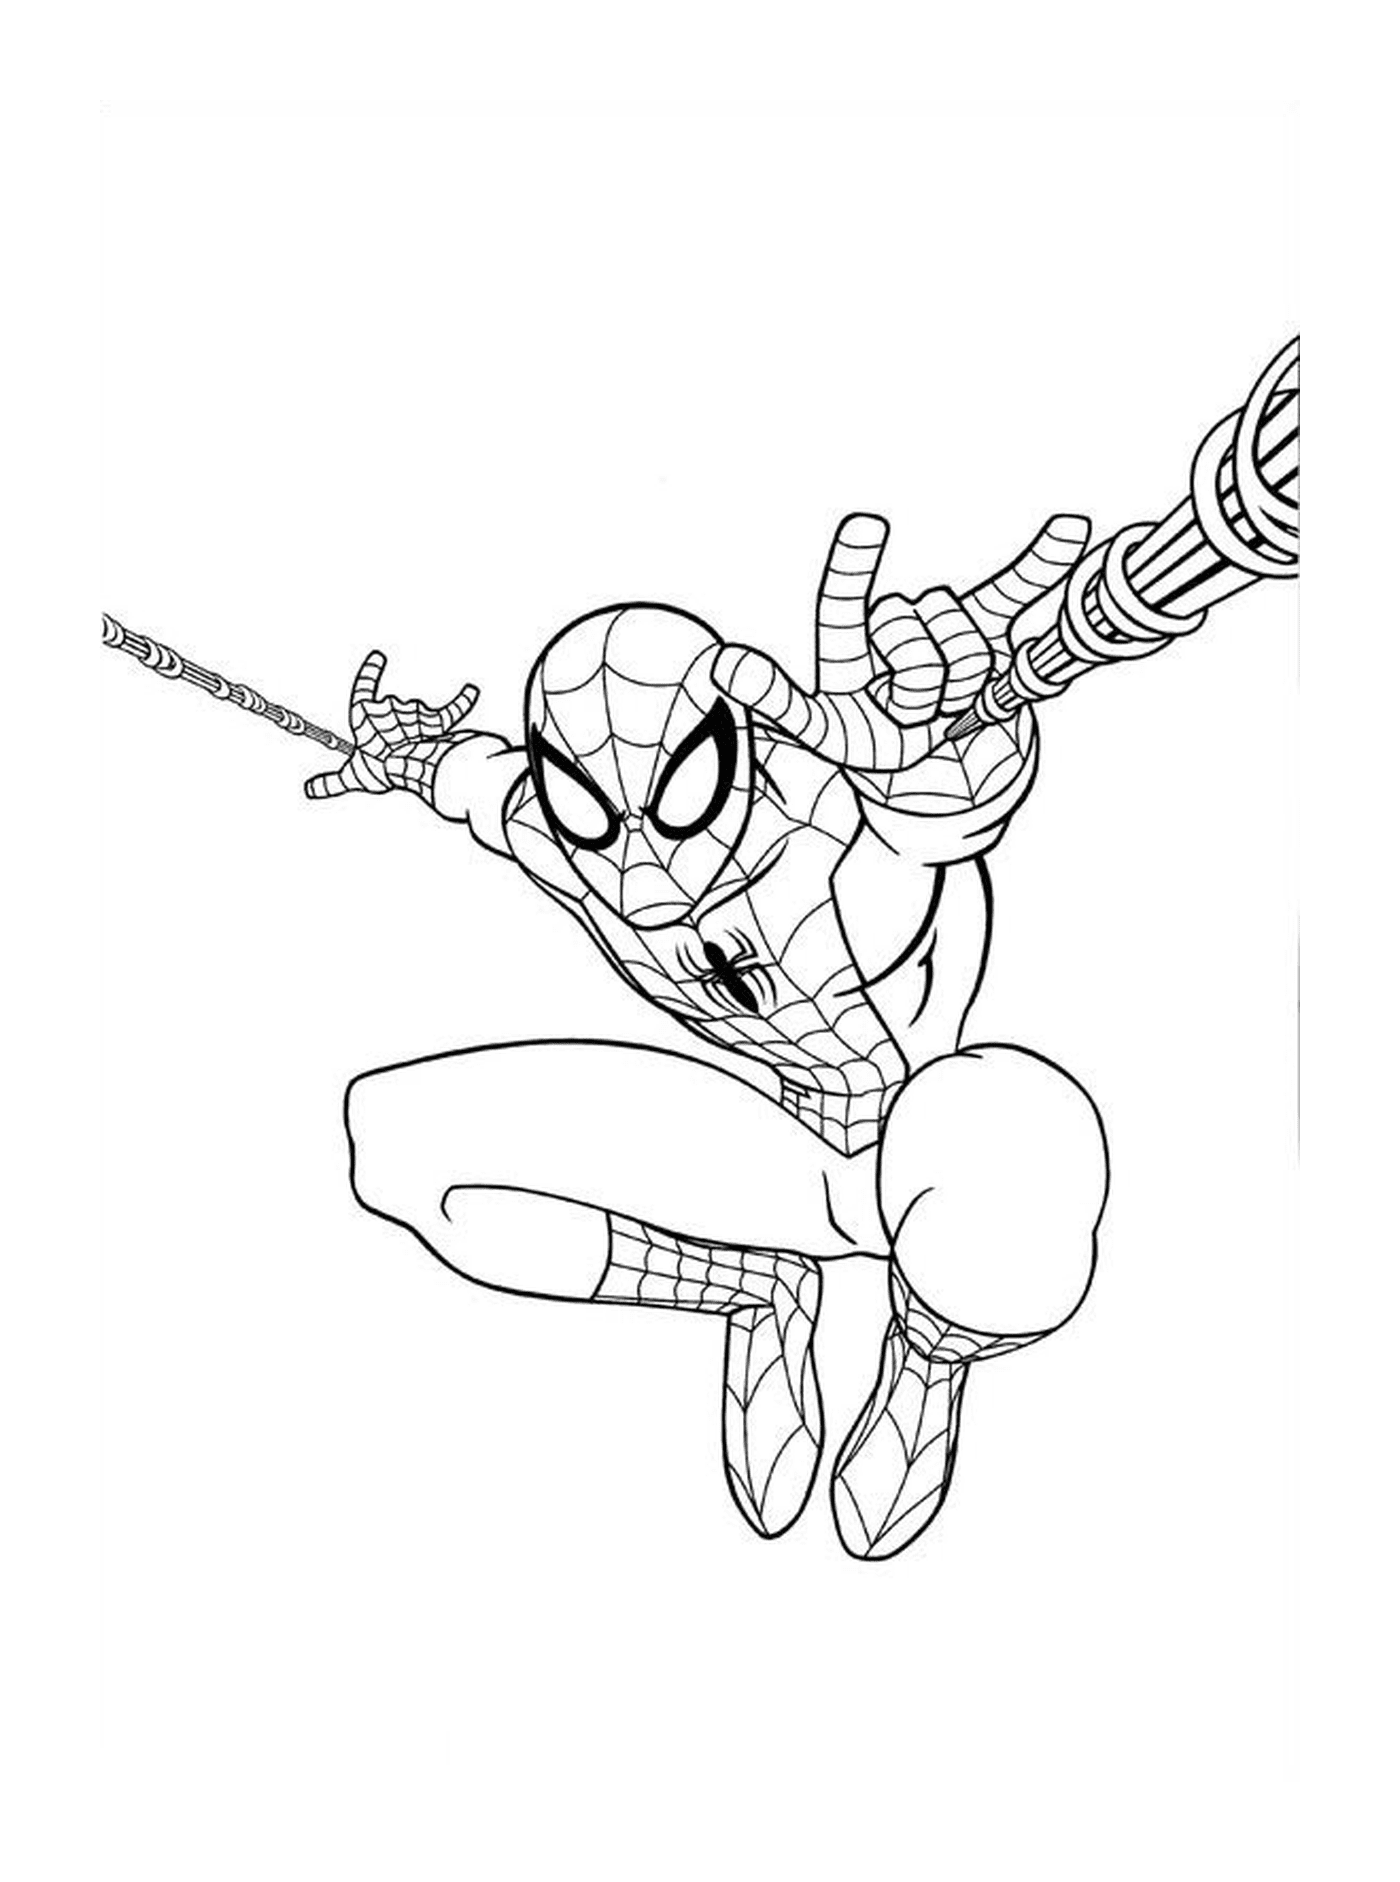  Spiderman jumping 